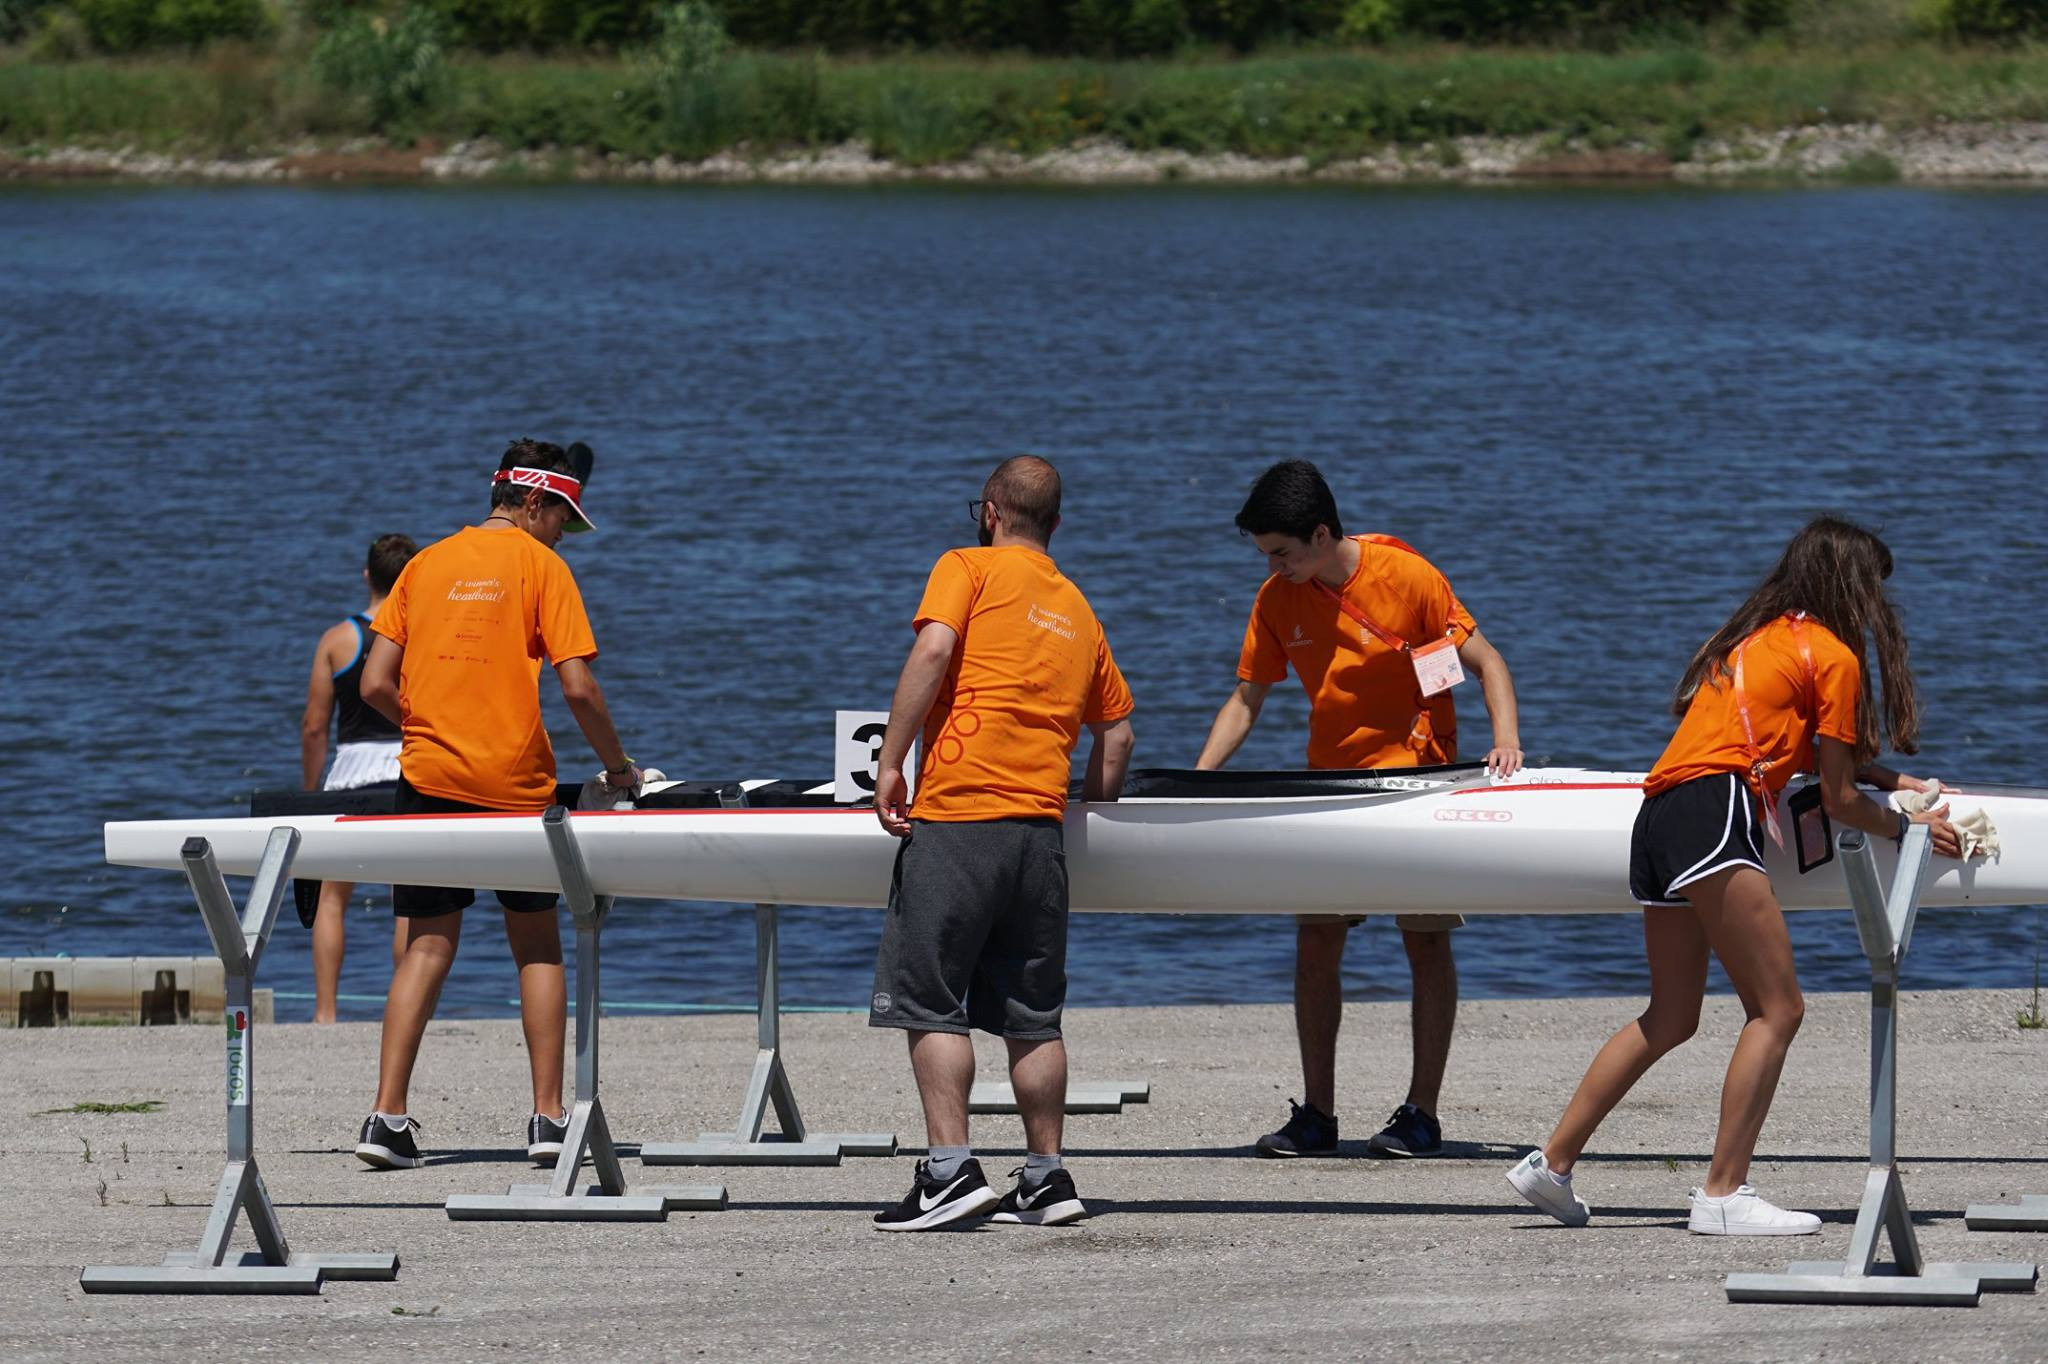 Hosts University of Coimbra enjoy European Universities Games canoe sprint success